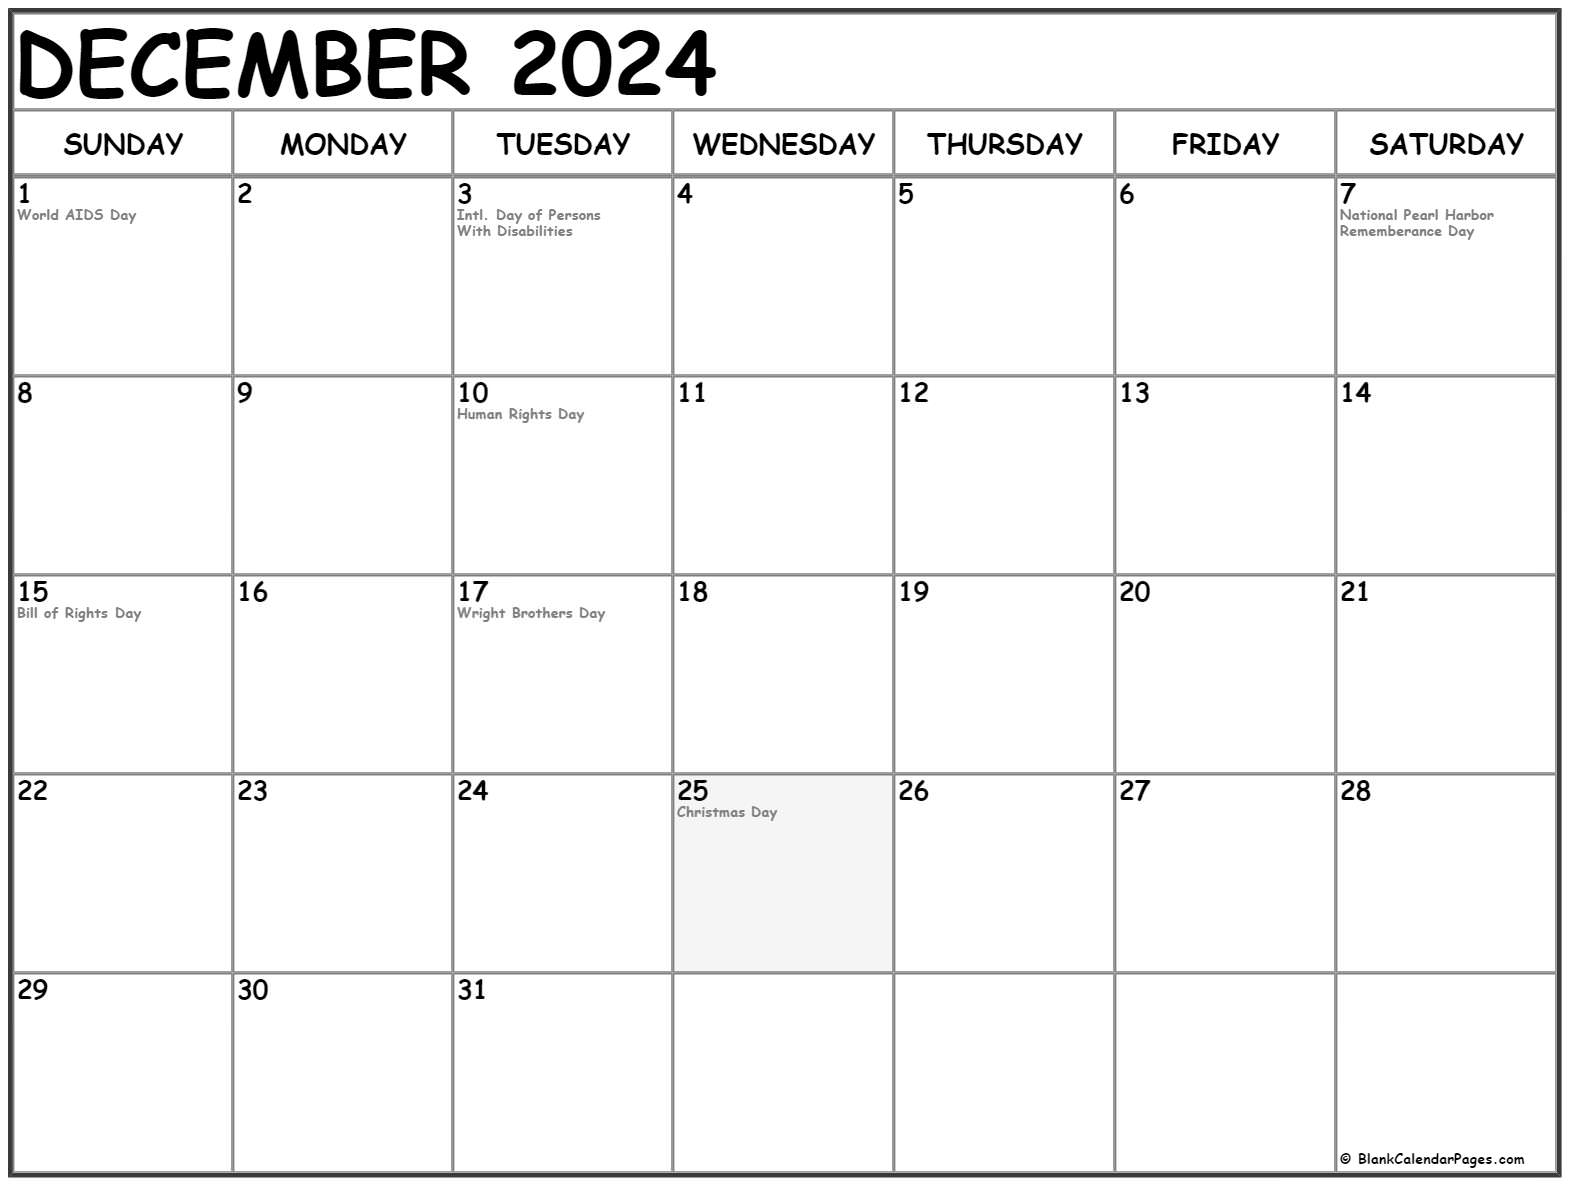 december-2018-calendar-uk-public-holidays-ukcalendar